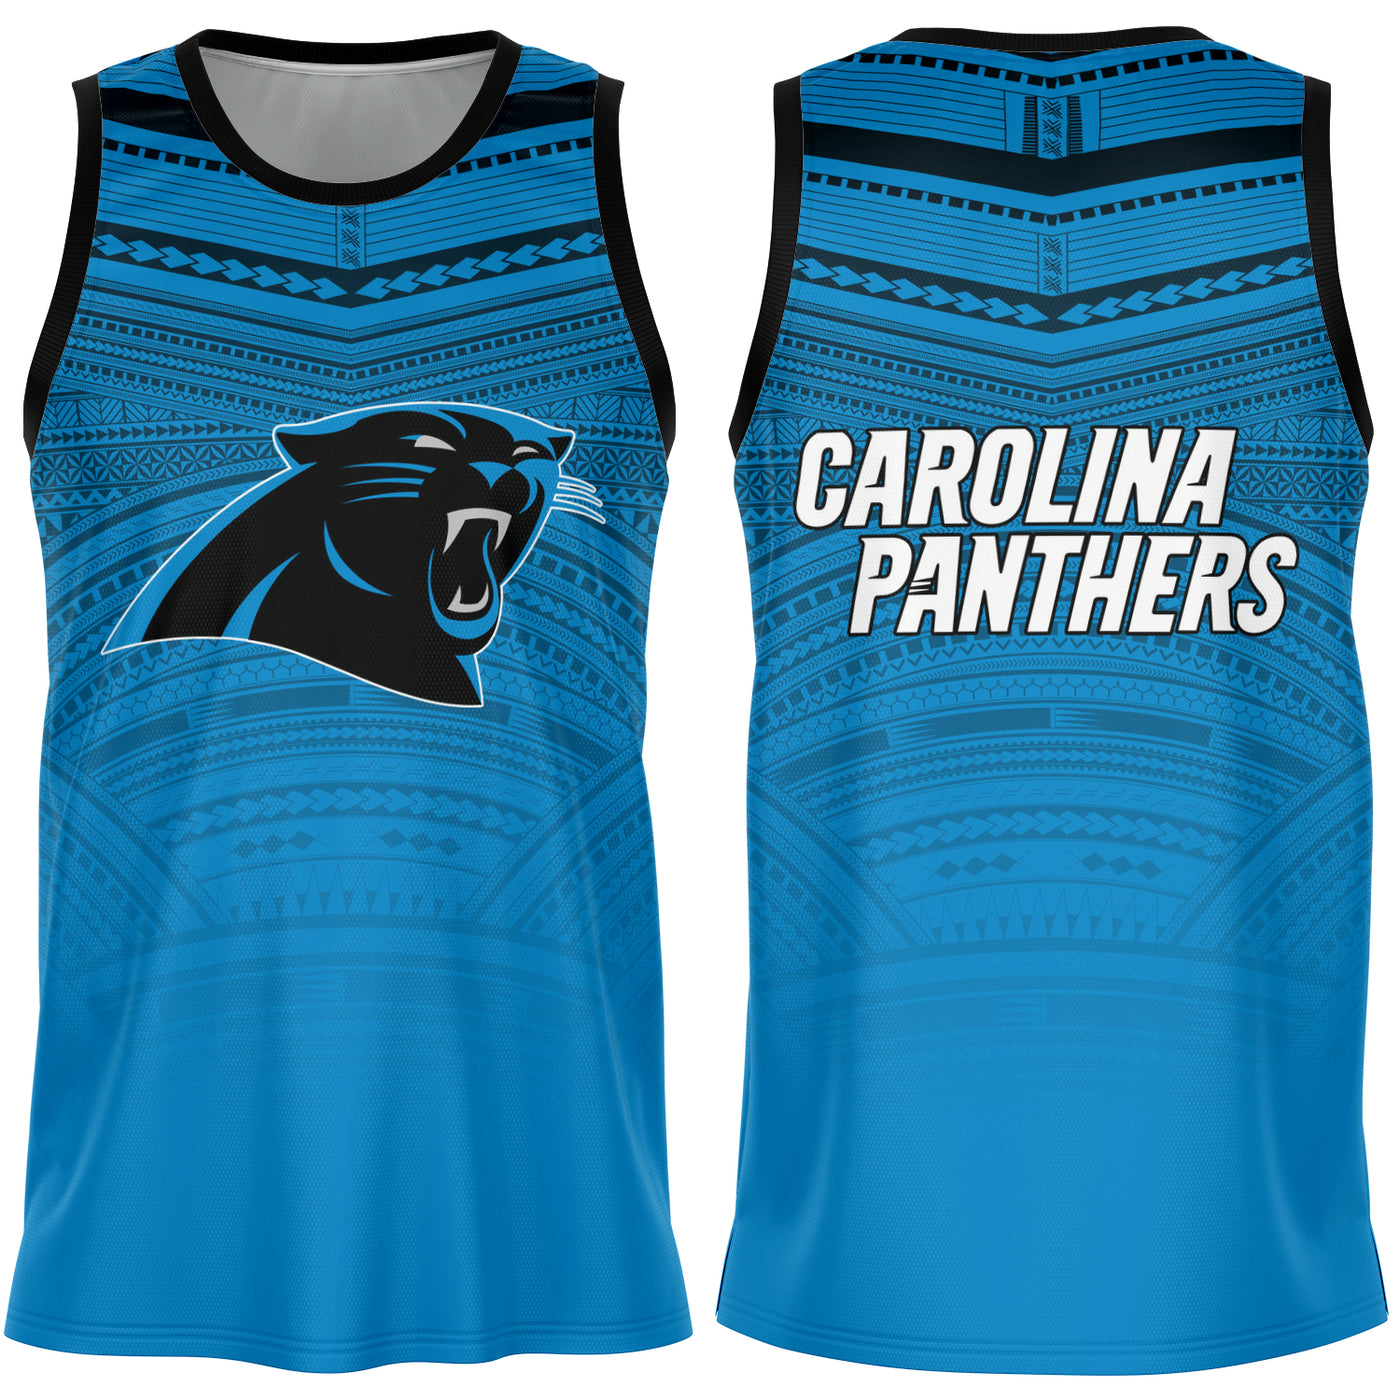 Carolina Panthers Jerseys, Panthers Uniforms, Jersey